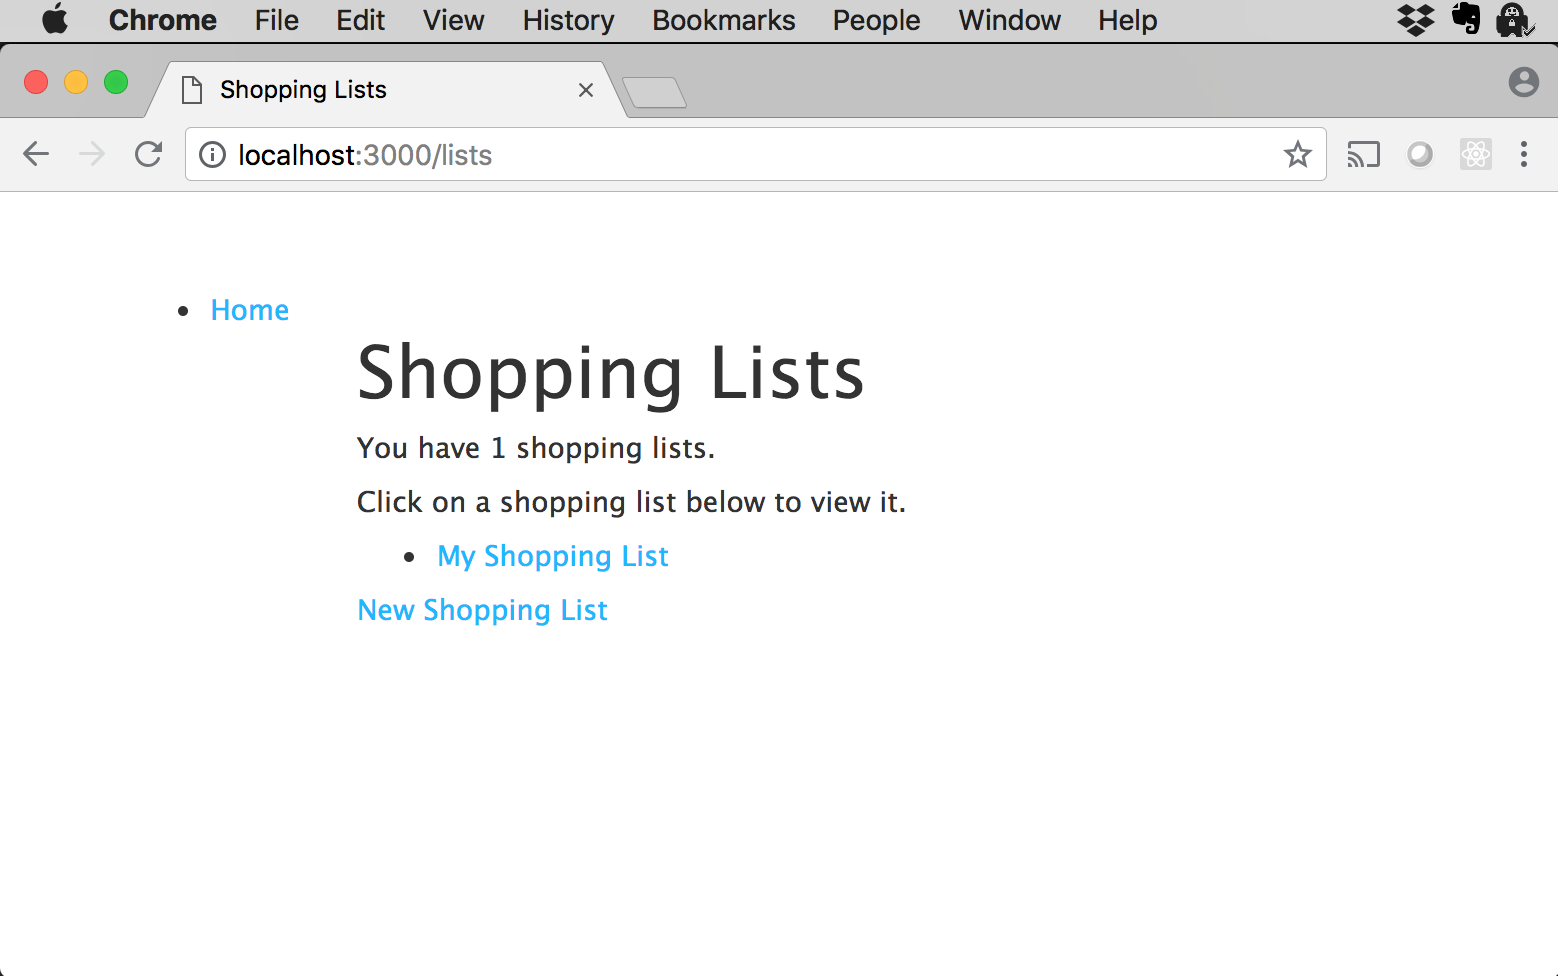 Shopping List application main screen after creating a new shopping list